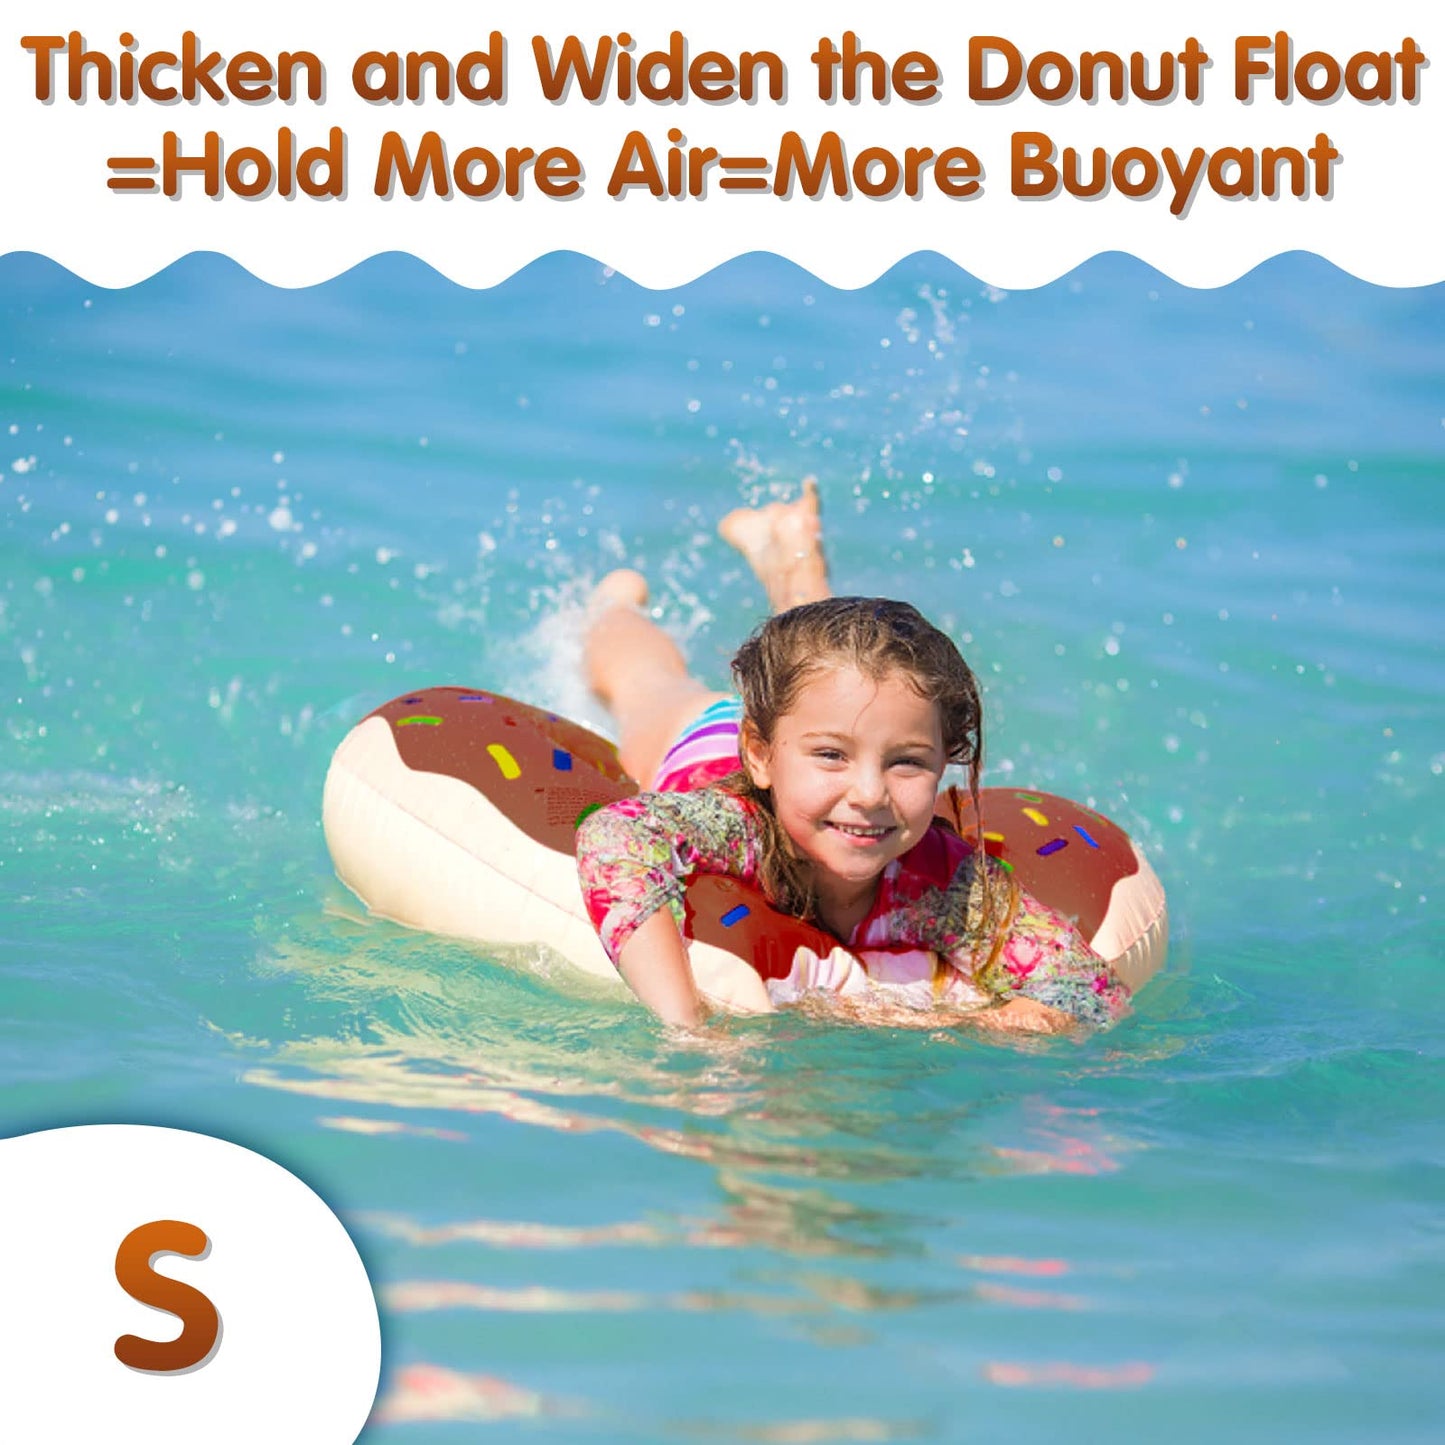 DMAR Donut Pool Floats Donut Pool Floatie Donut Tube Pool Doughnut Pool Float Donut Inflatables Doughnut Inner Tube Doughnut Pool Floatie Donut Pool Ring Donut Swimming Ring for Beach Pool #5 23.4in Chocolate Brown